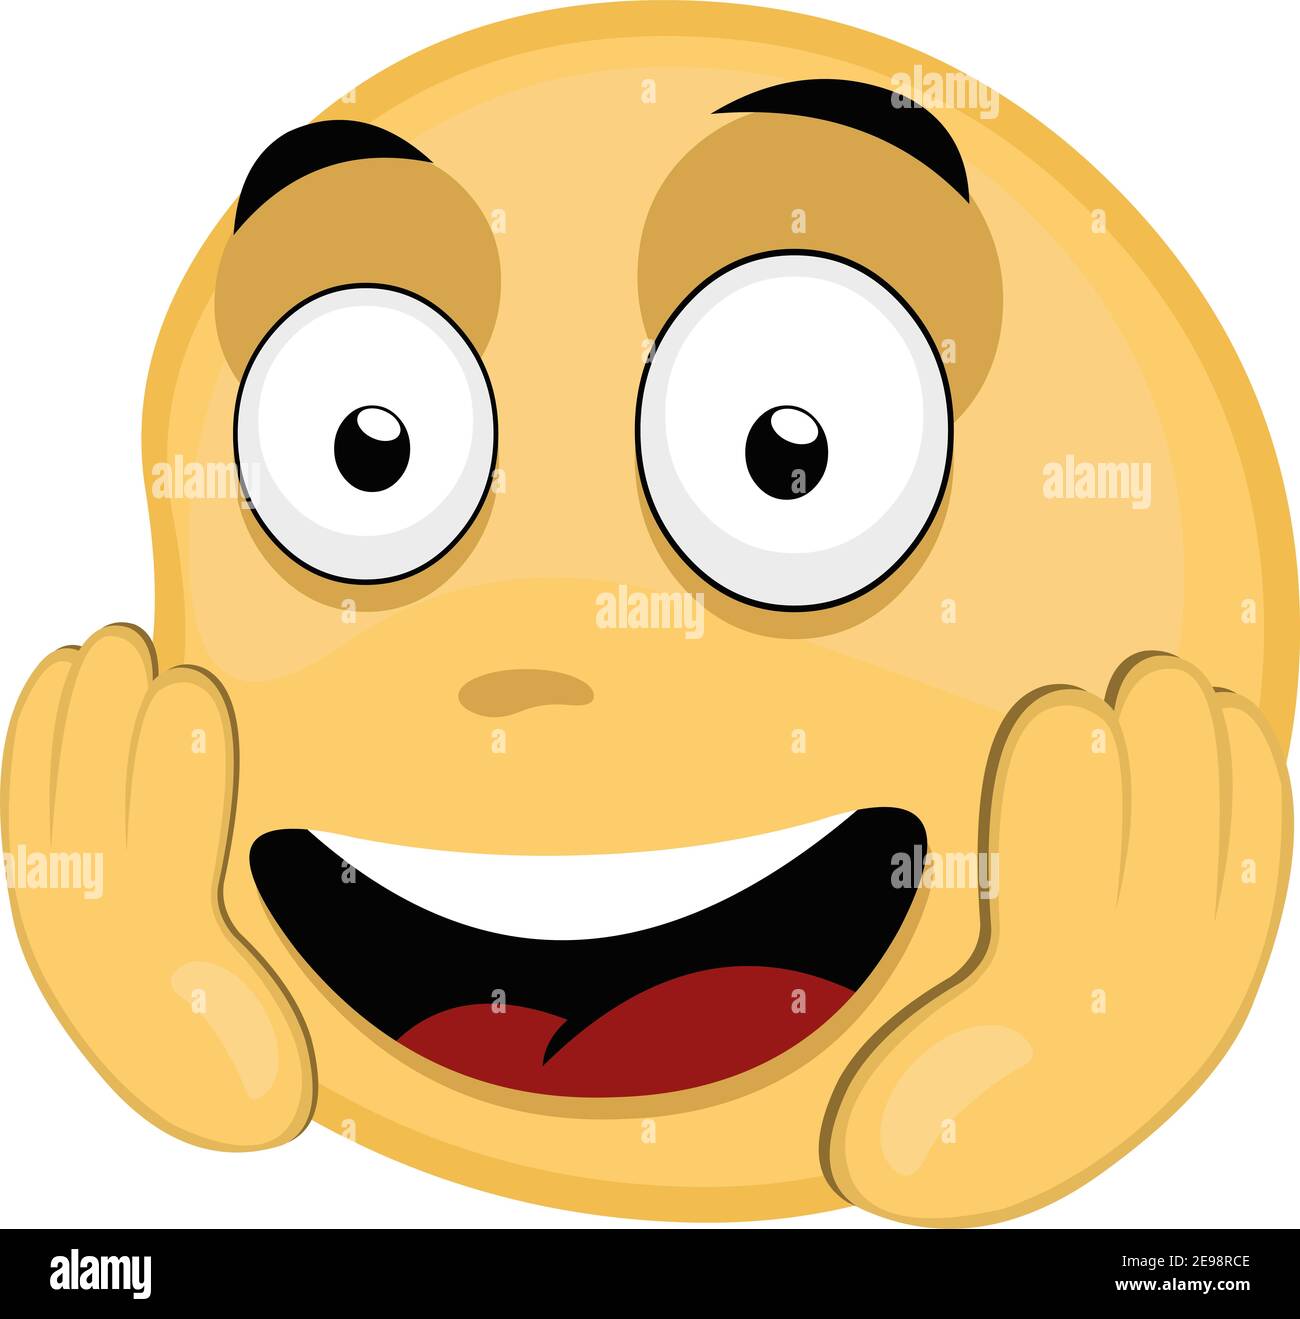 Vector illustration of a happy emoticon Stock Photo